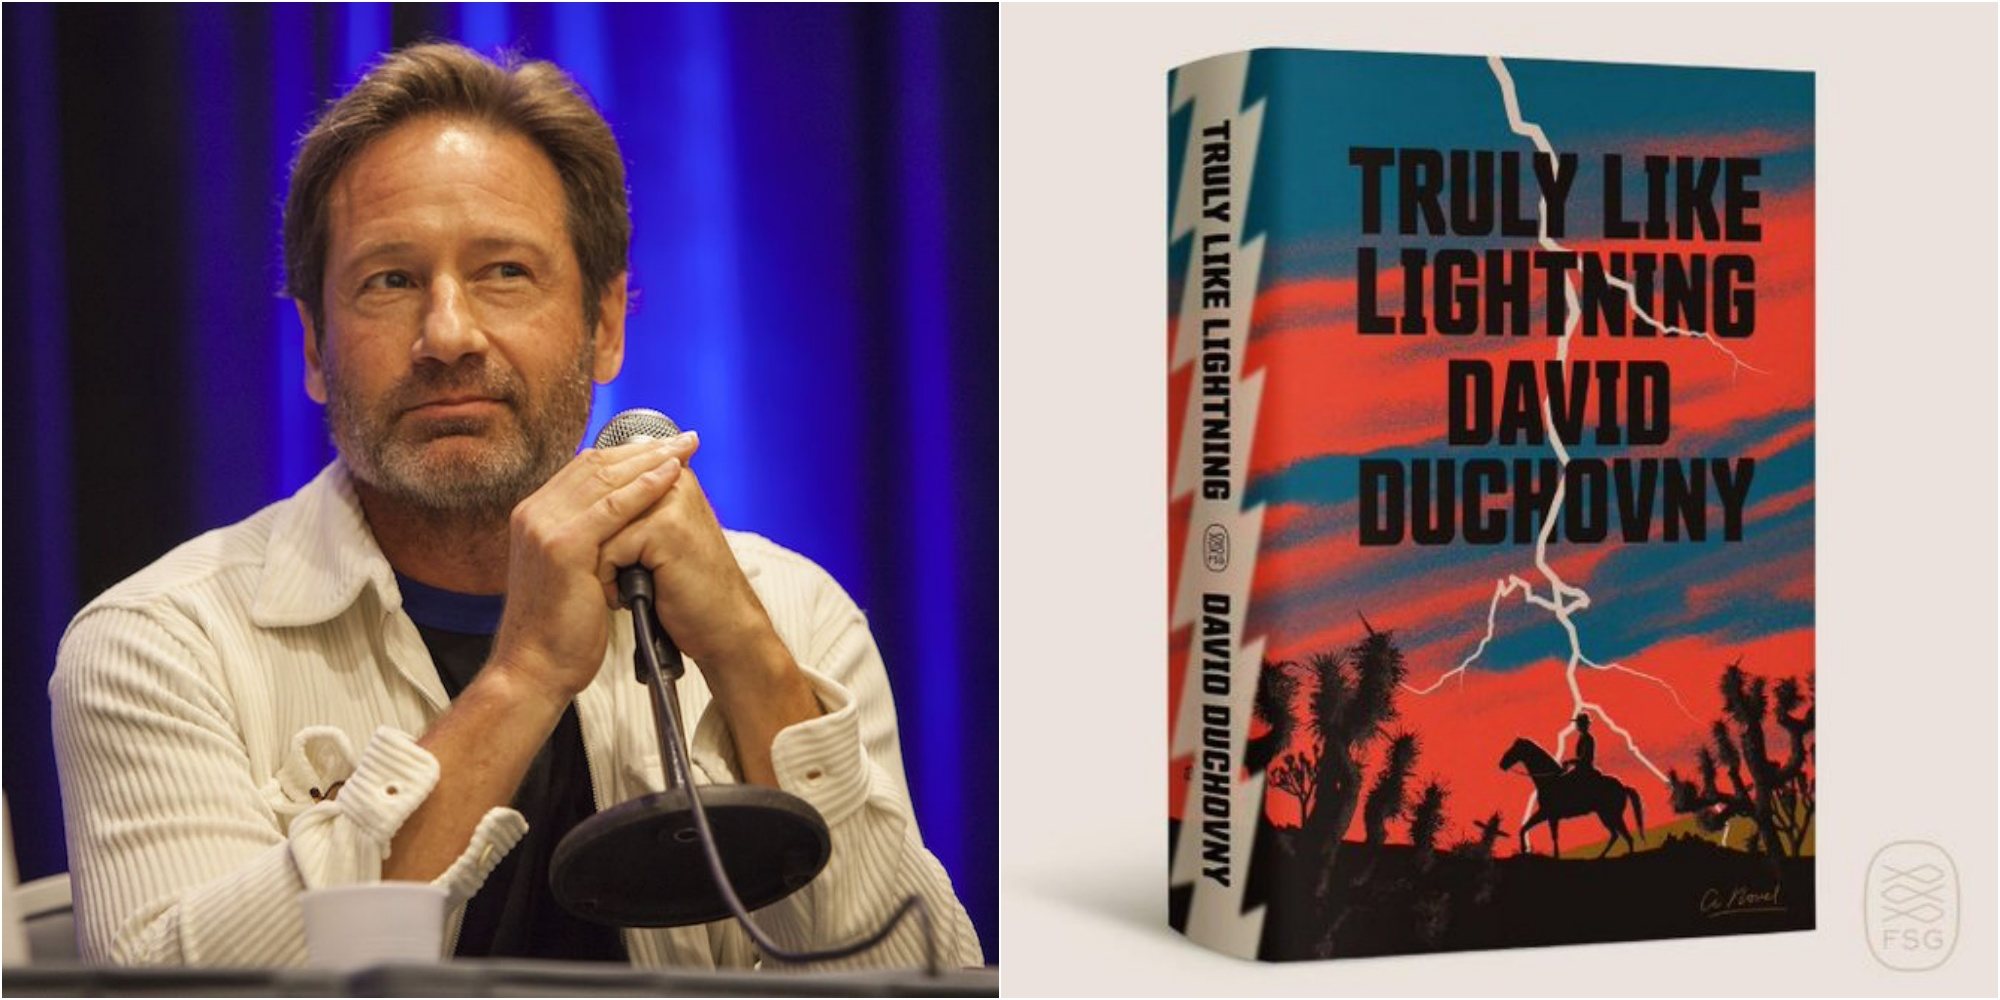 David Duchovny, autor de "Truly Like Lightning"